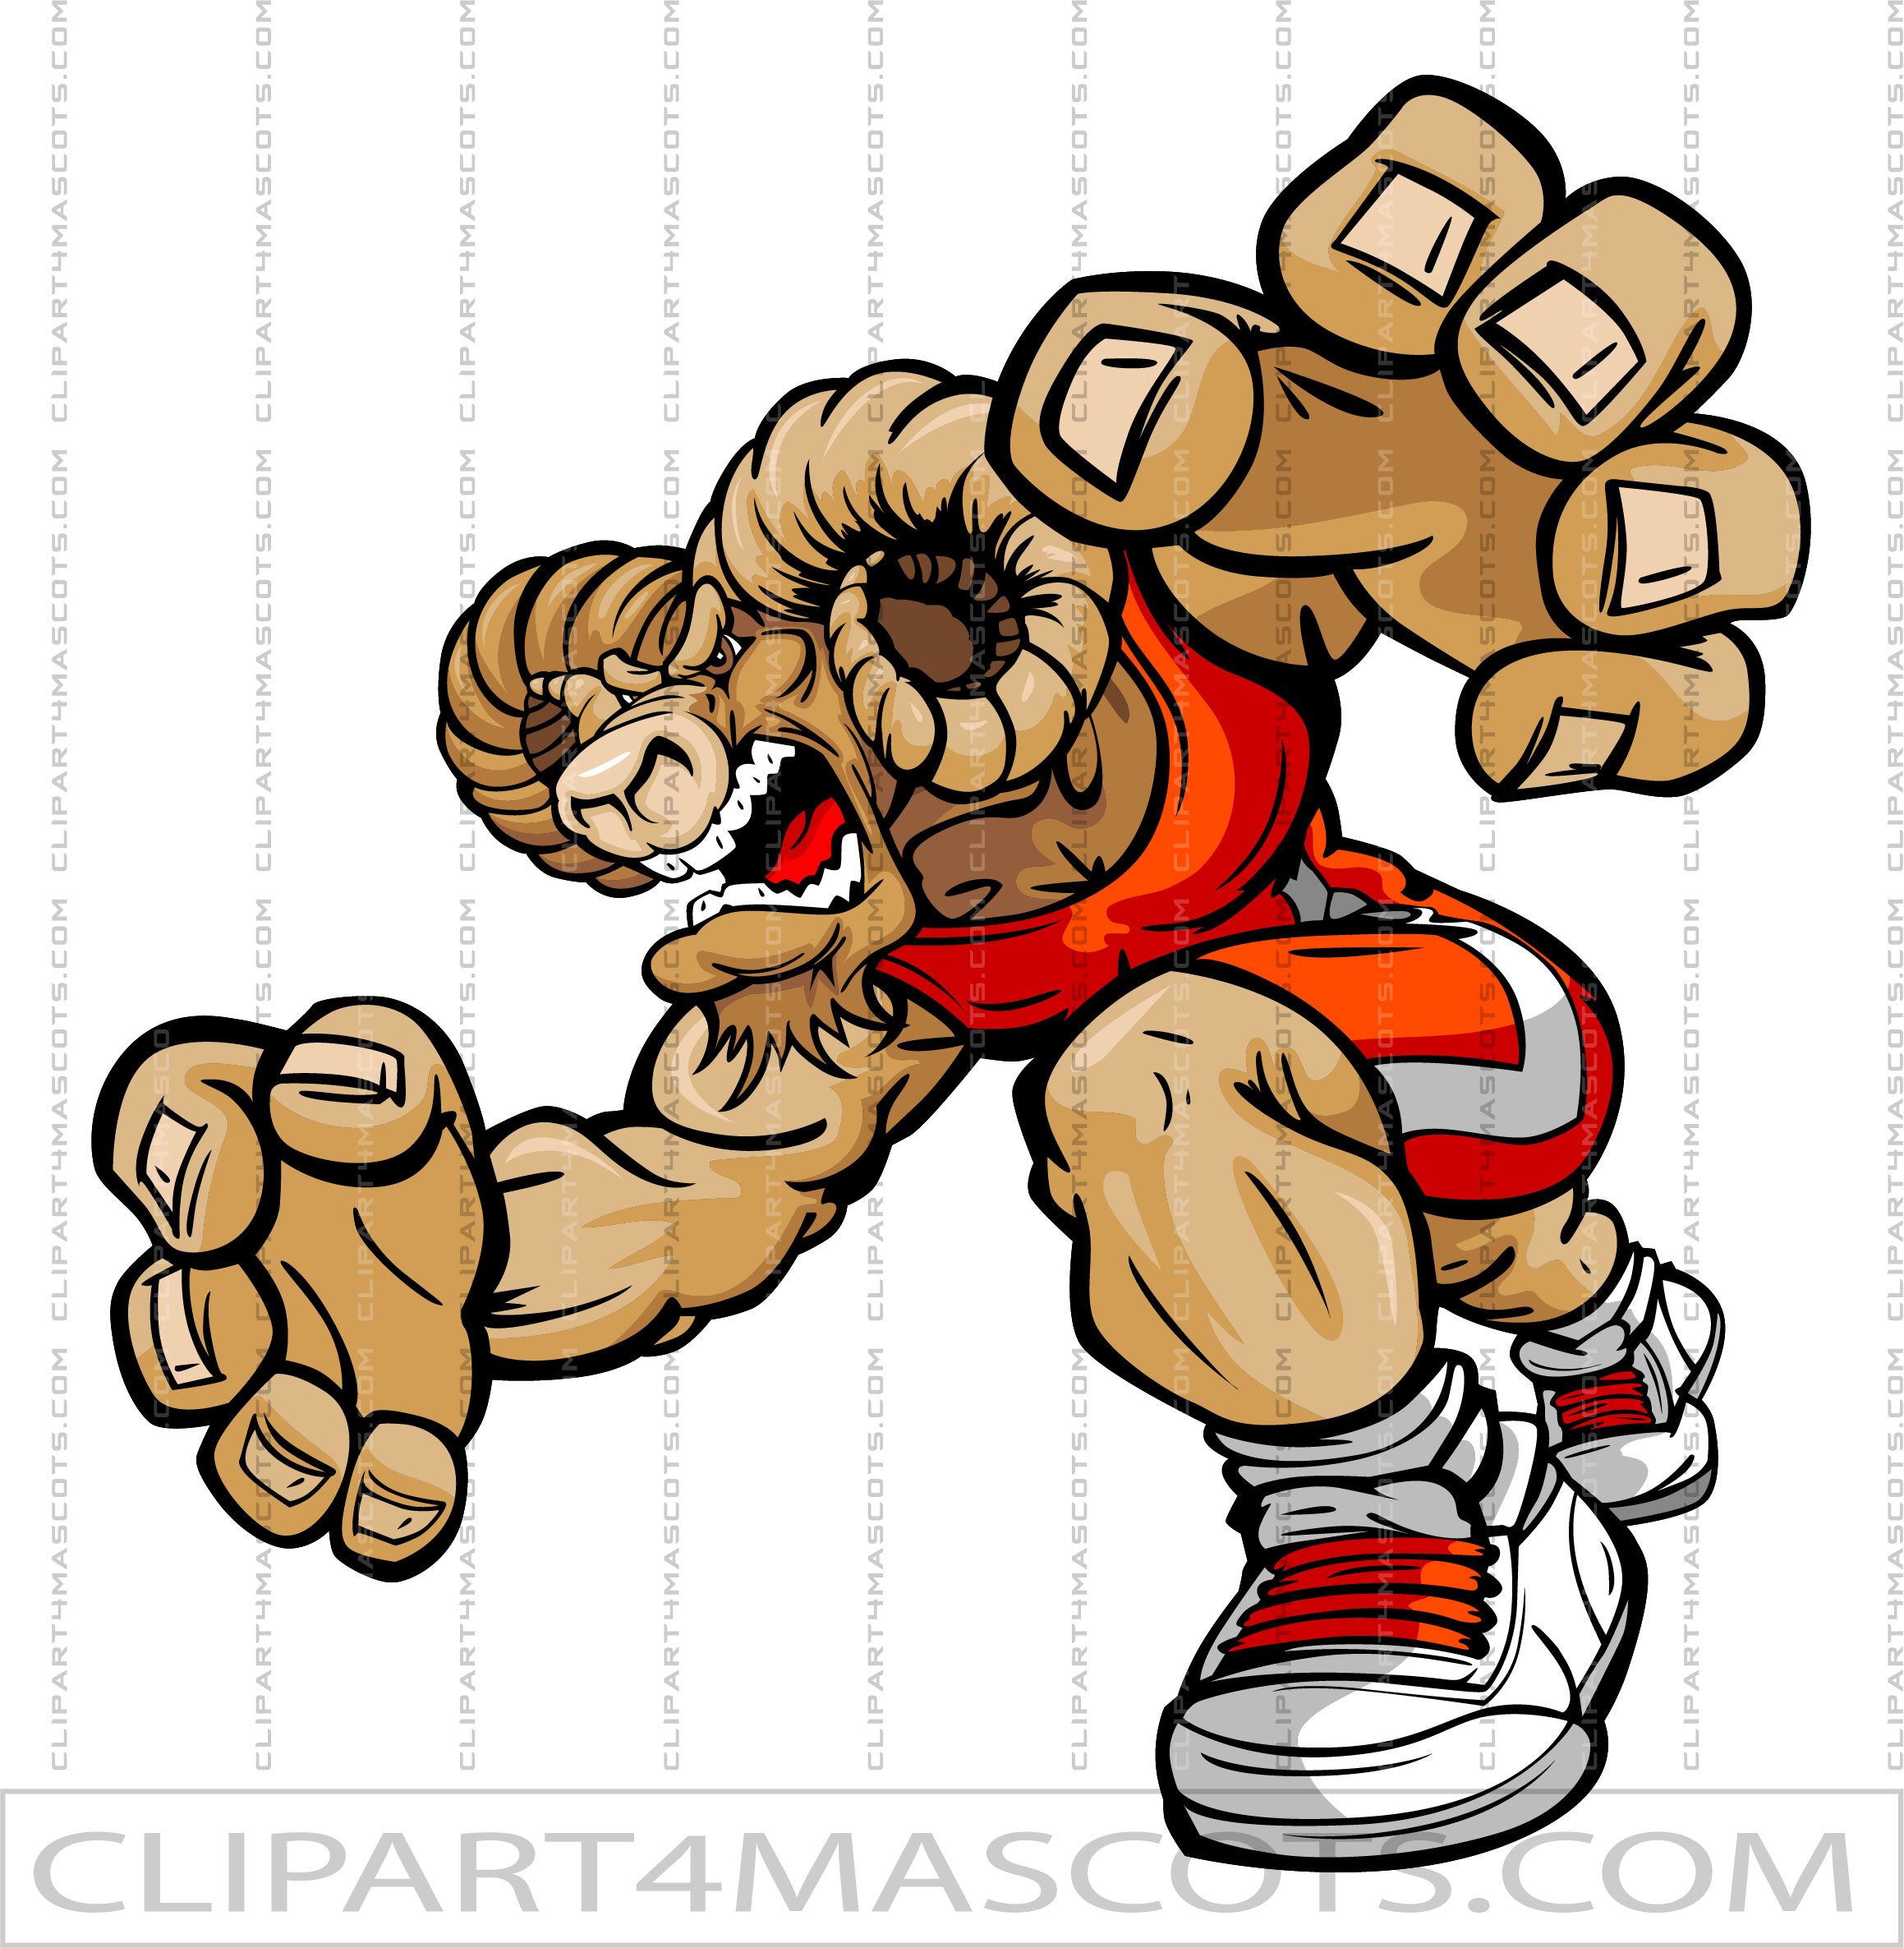 Bighorn Wrestler Mascot